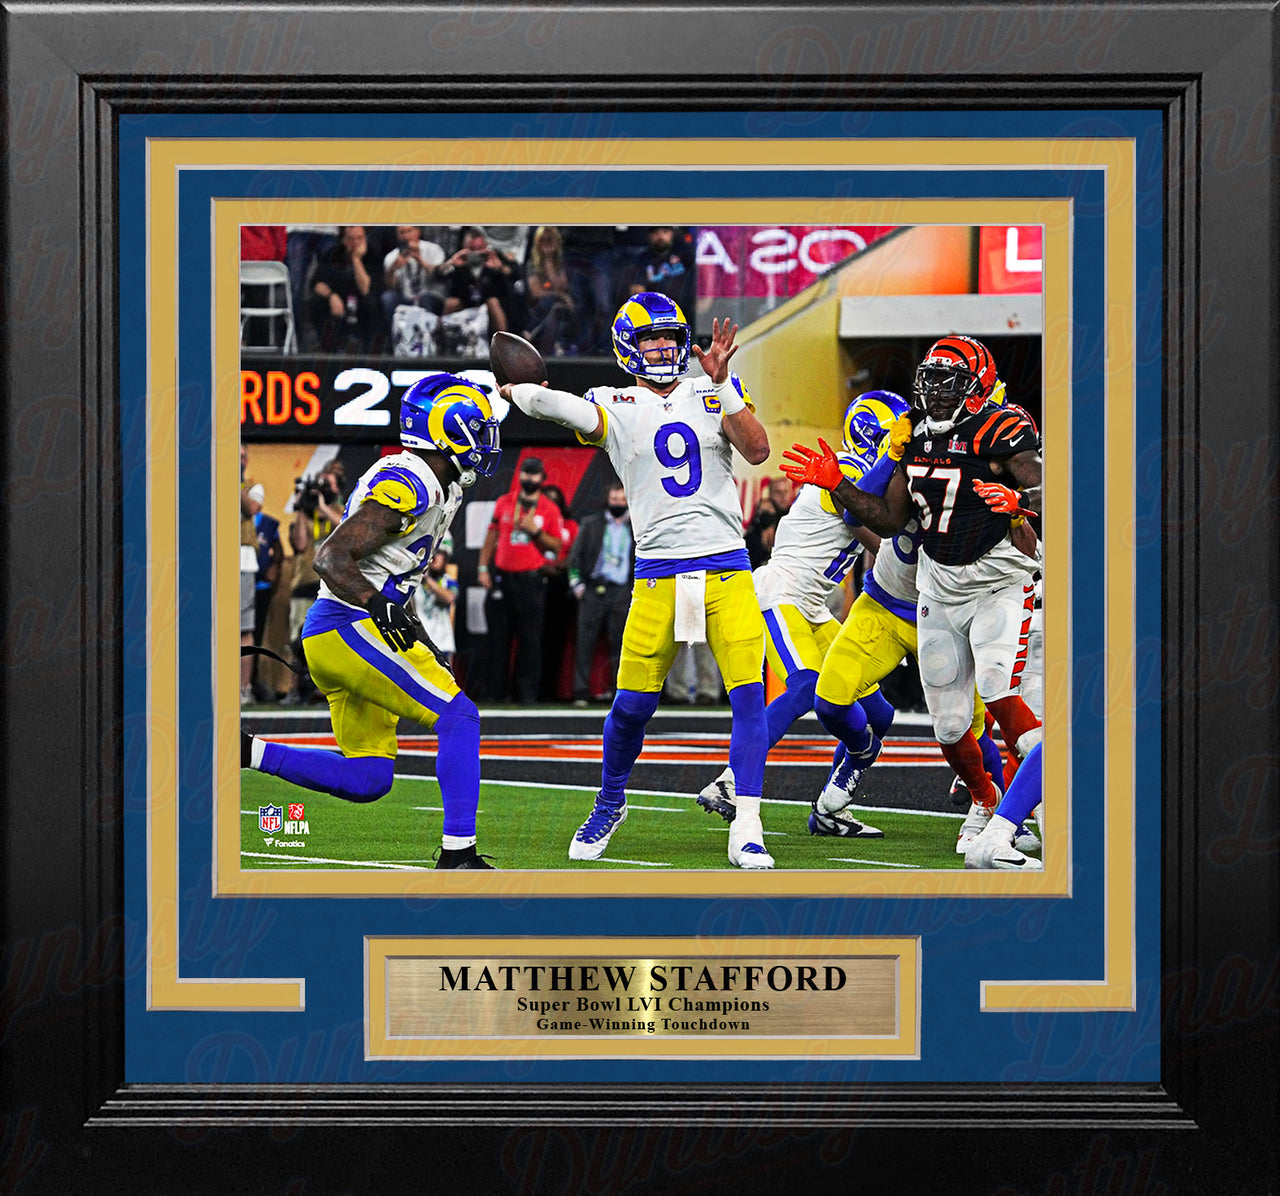 Matthew Stafford Game-Winning Touchdown Super Bowl LVI Los Angeles Rams 8x10 Framed Football Photo - Dynasty Sports & Framing 